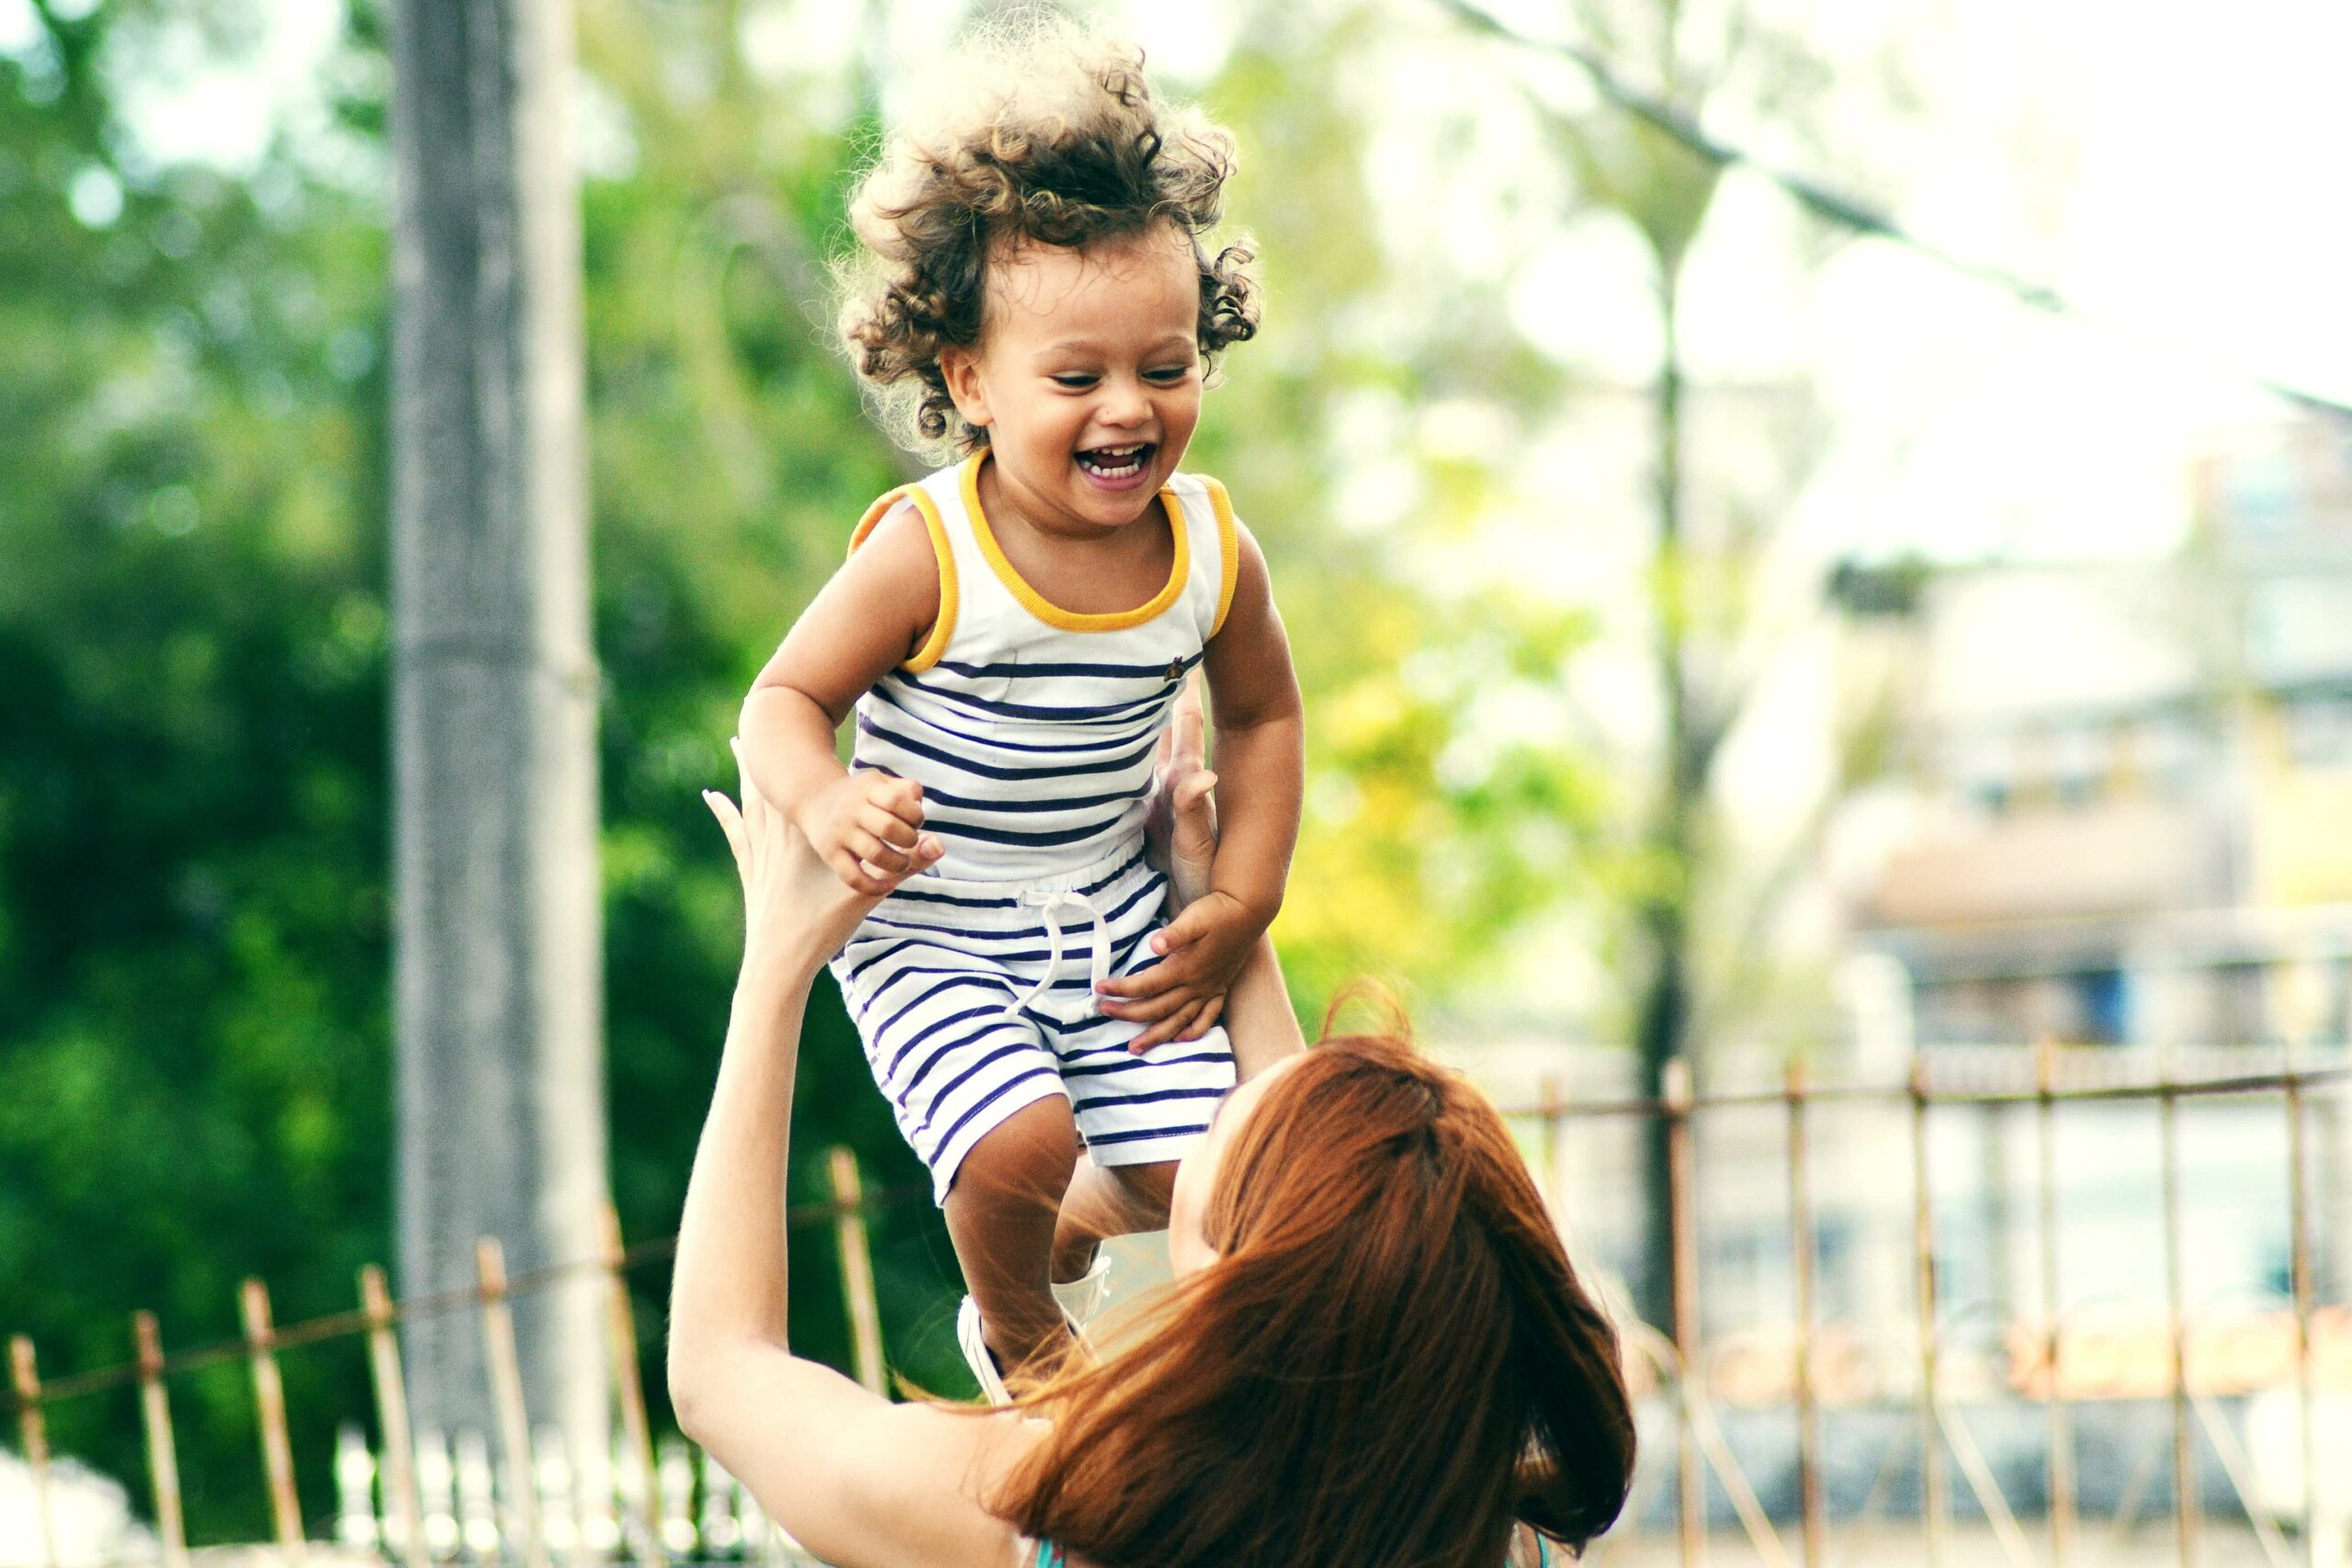 mum throwing toddler son in air at park